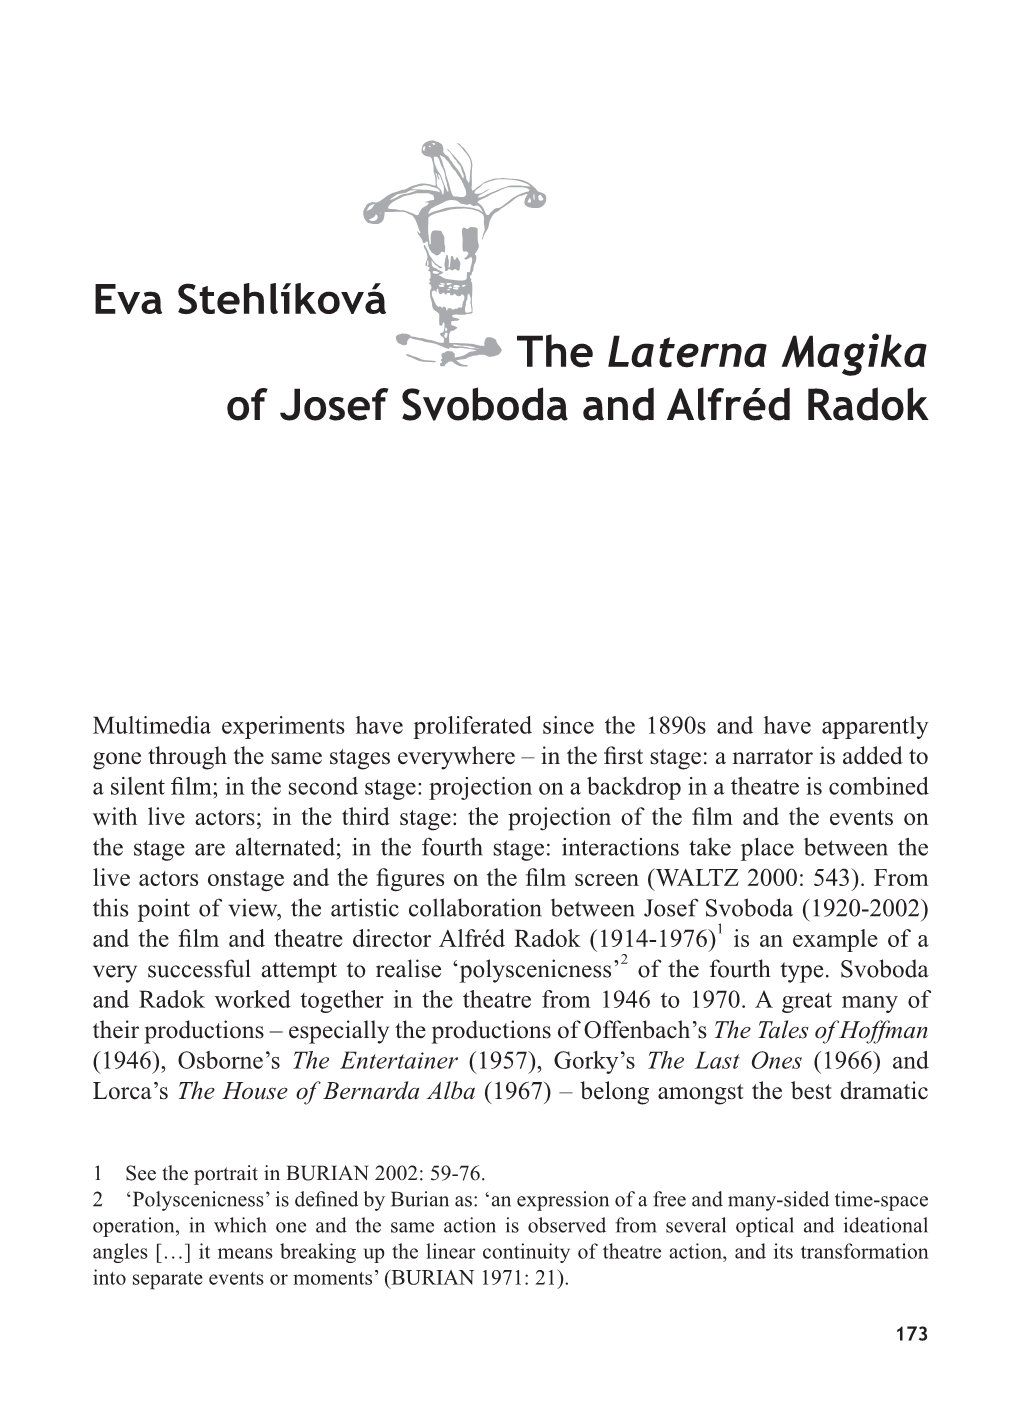 The Laterna Magika of Josef Svoboda and Alfréd Radok